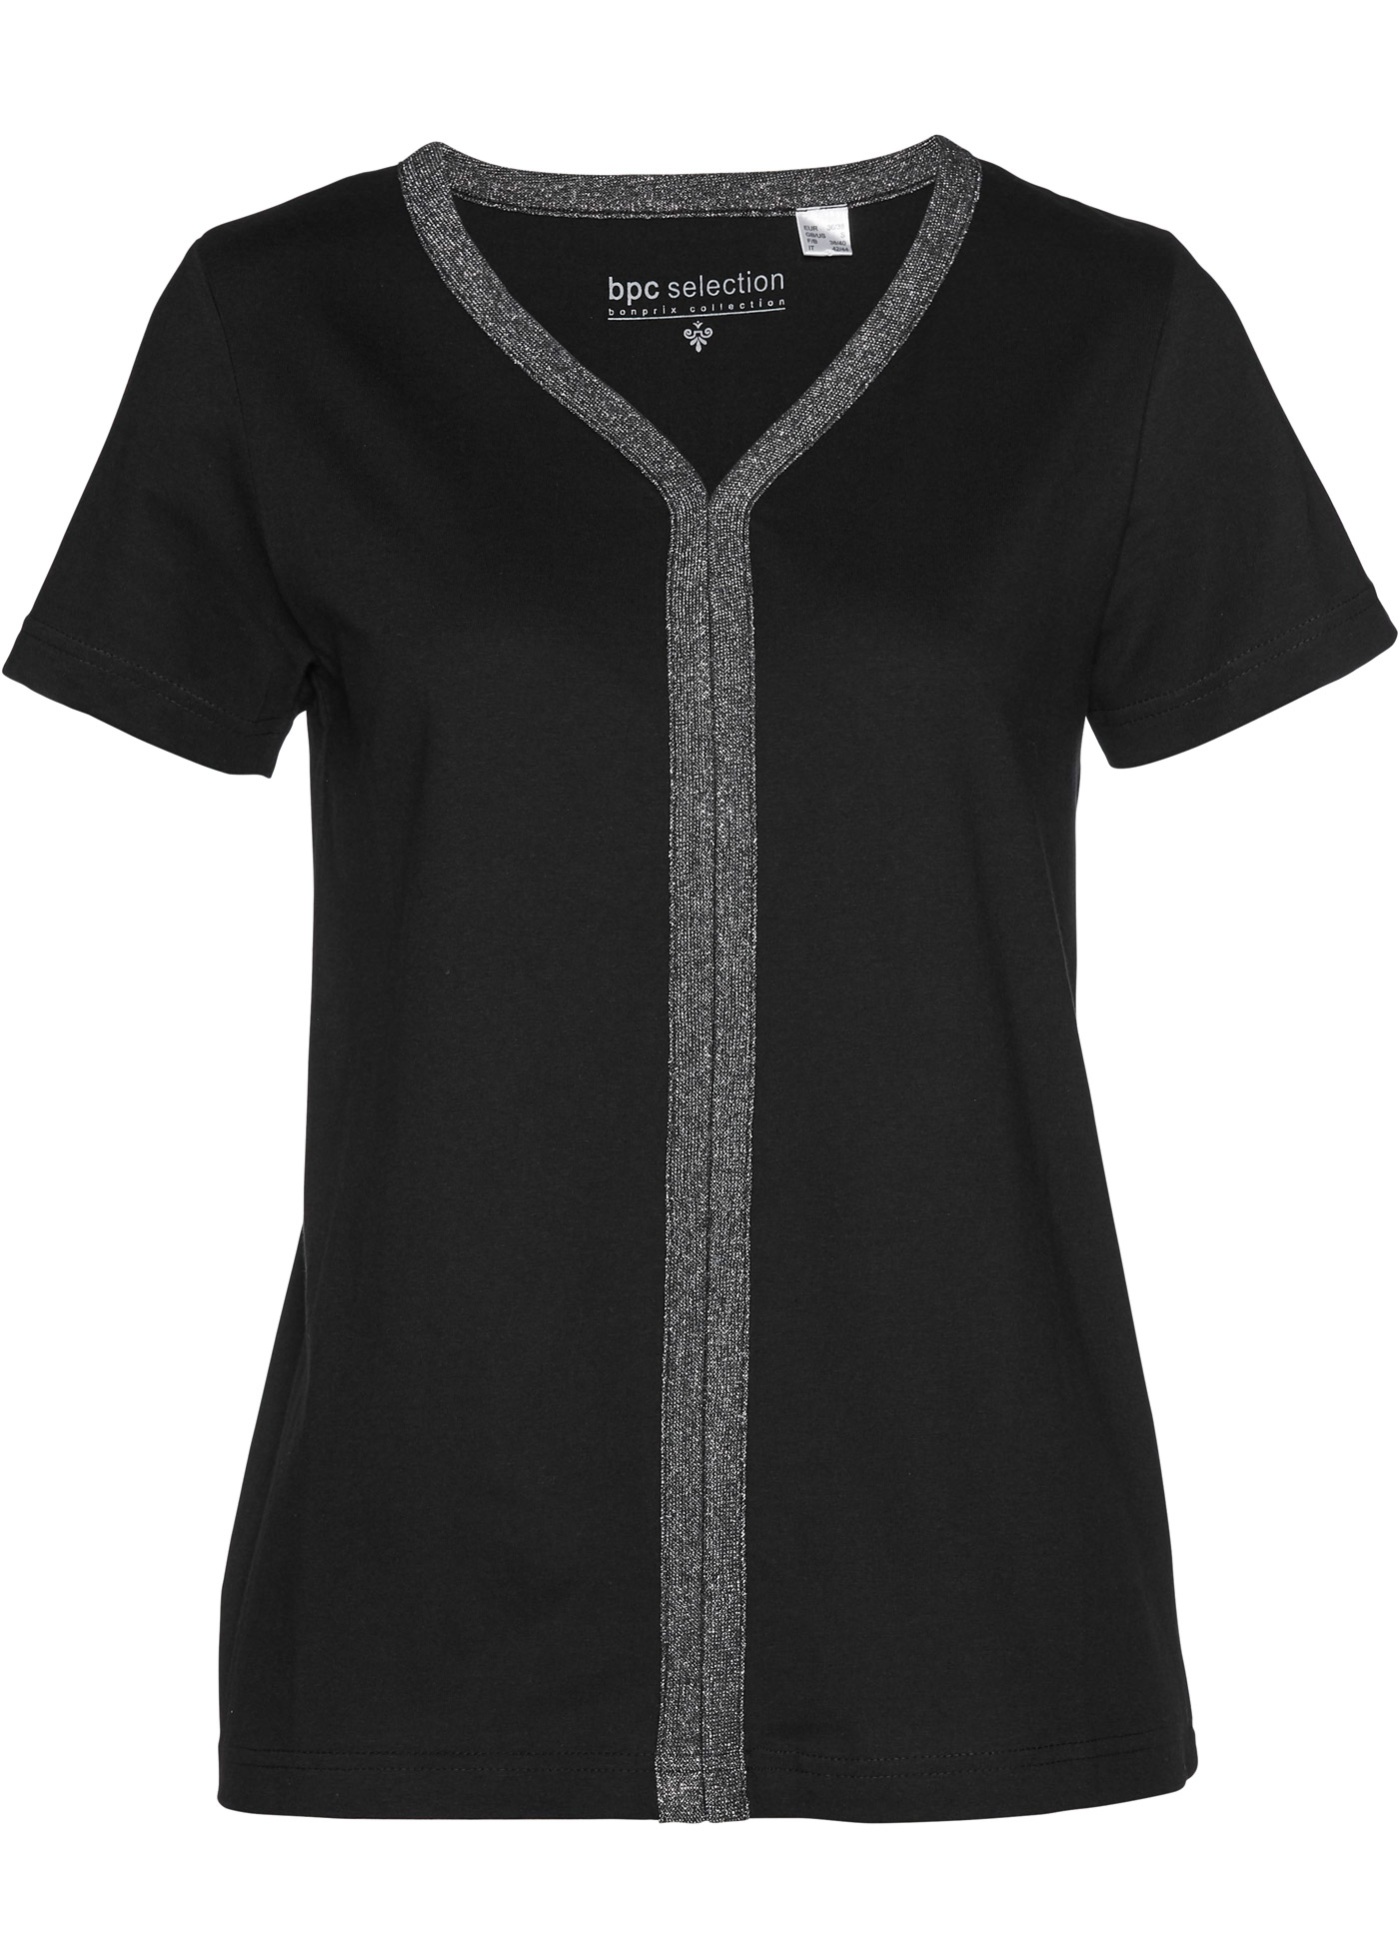 T-shirt con bordi in lurex (Nero) - bpc selection